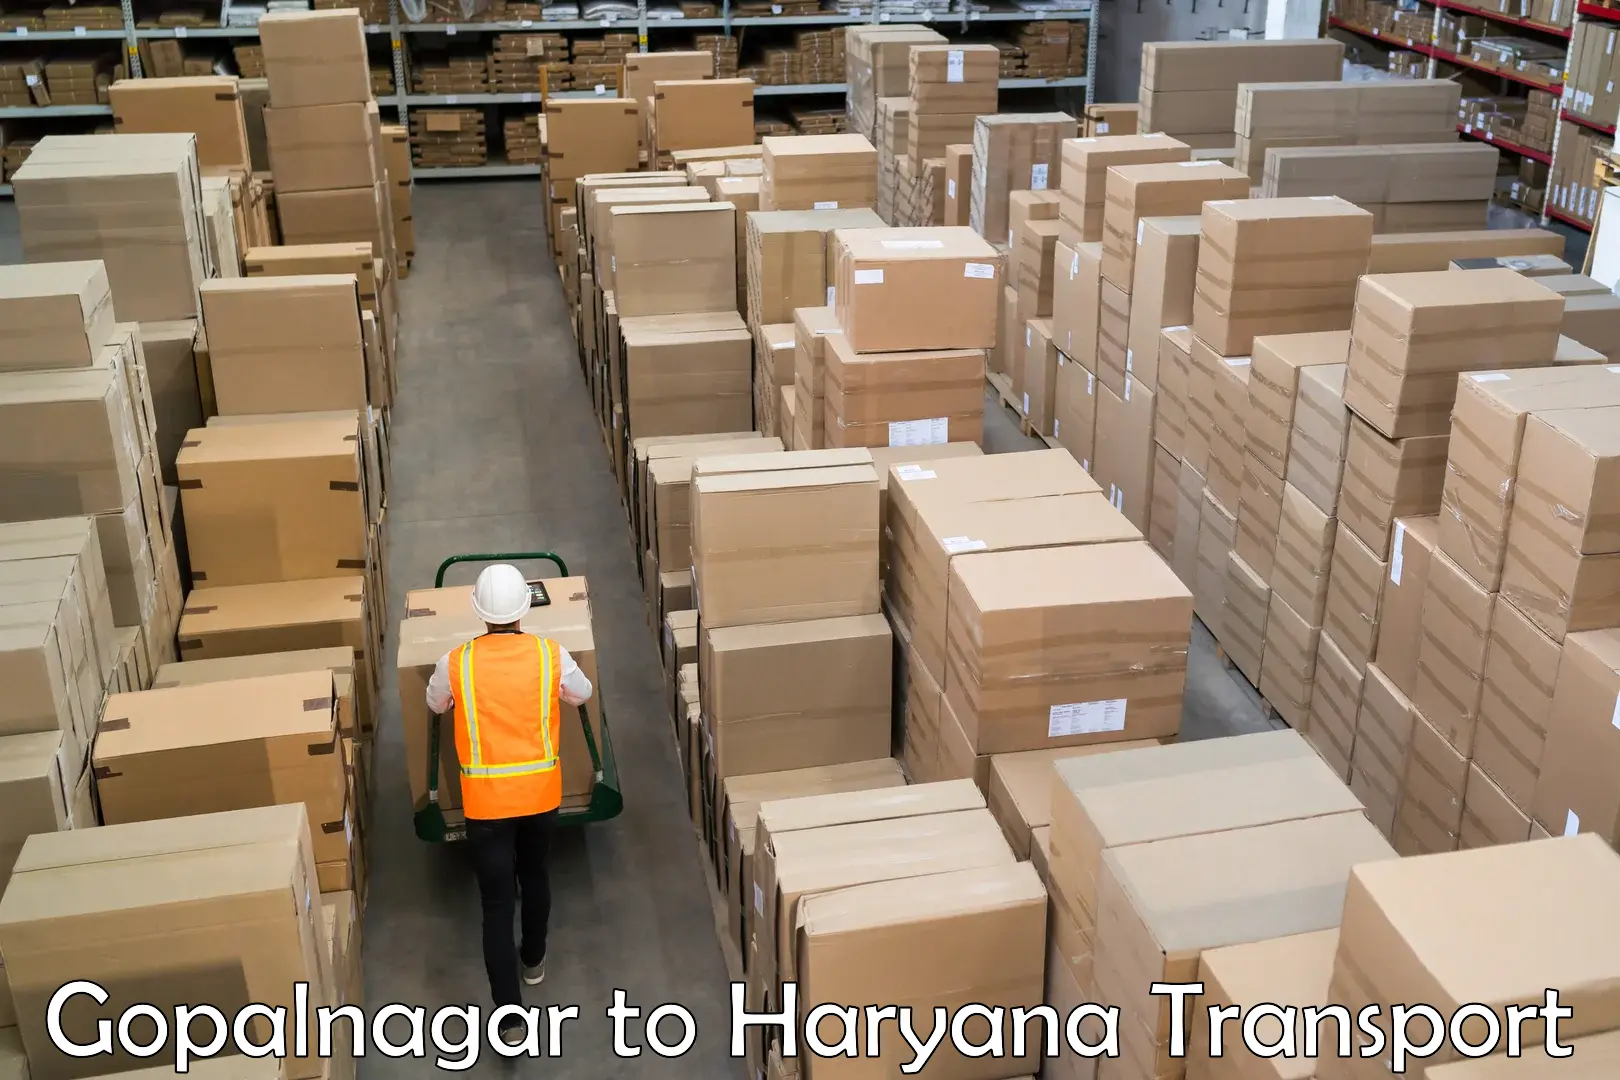 Shipping partner Gopalnagar to Sonipat